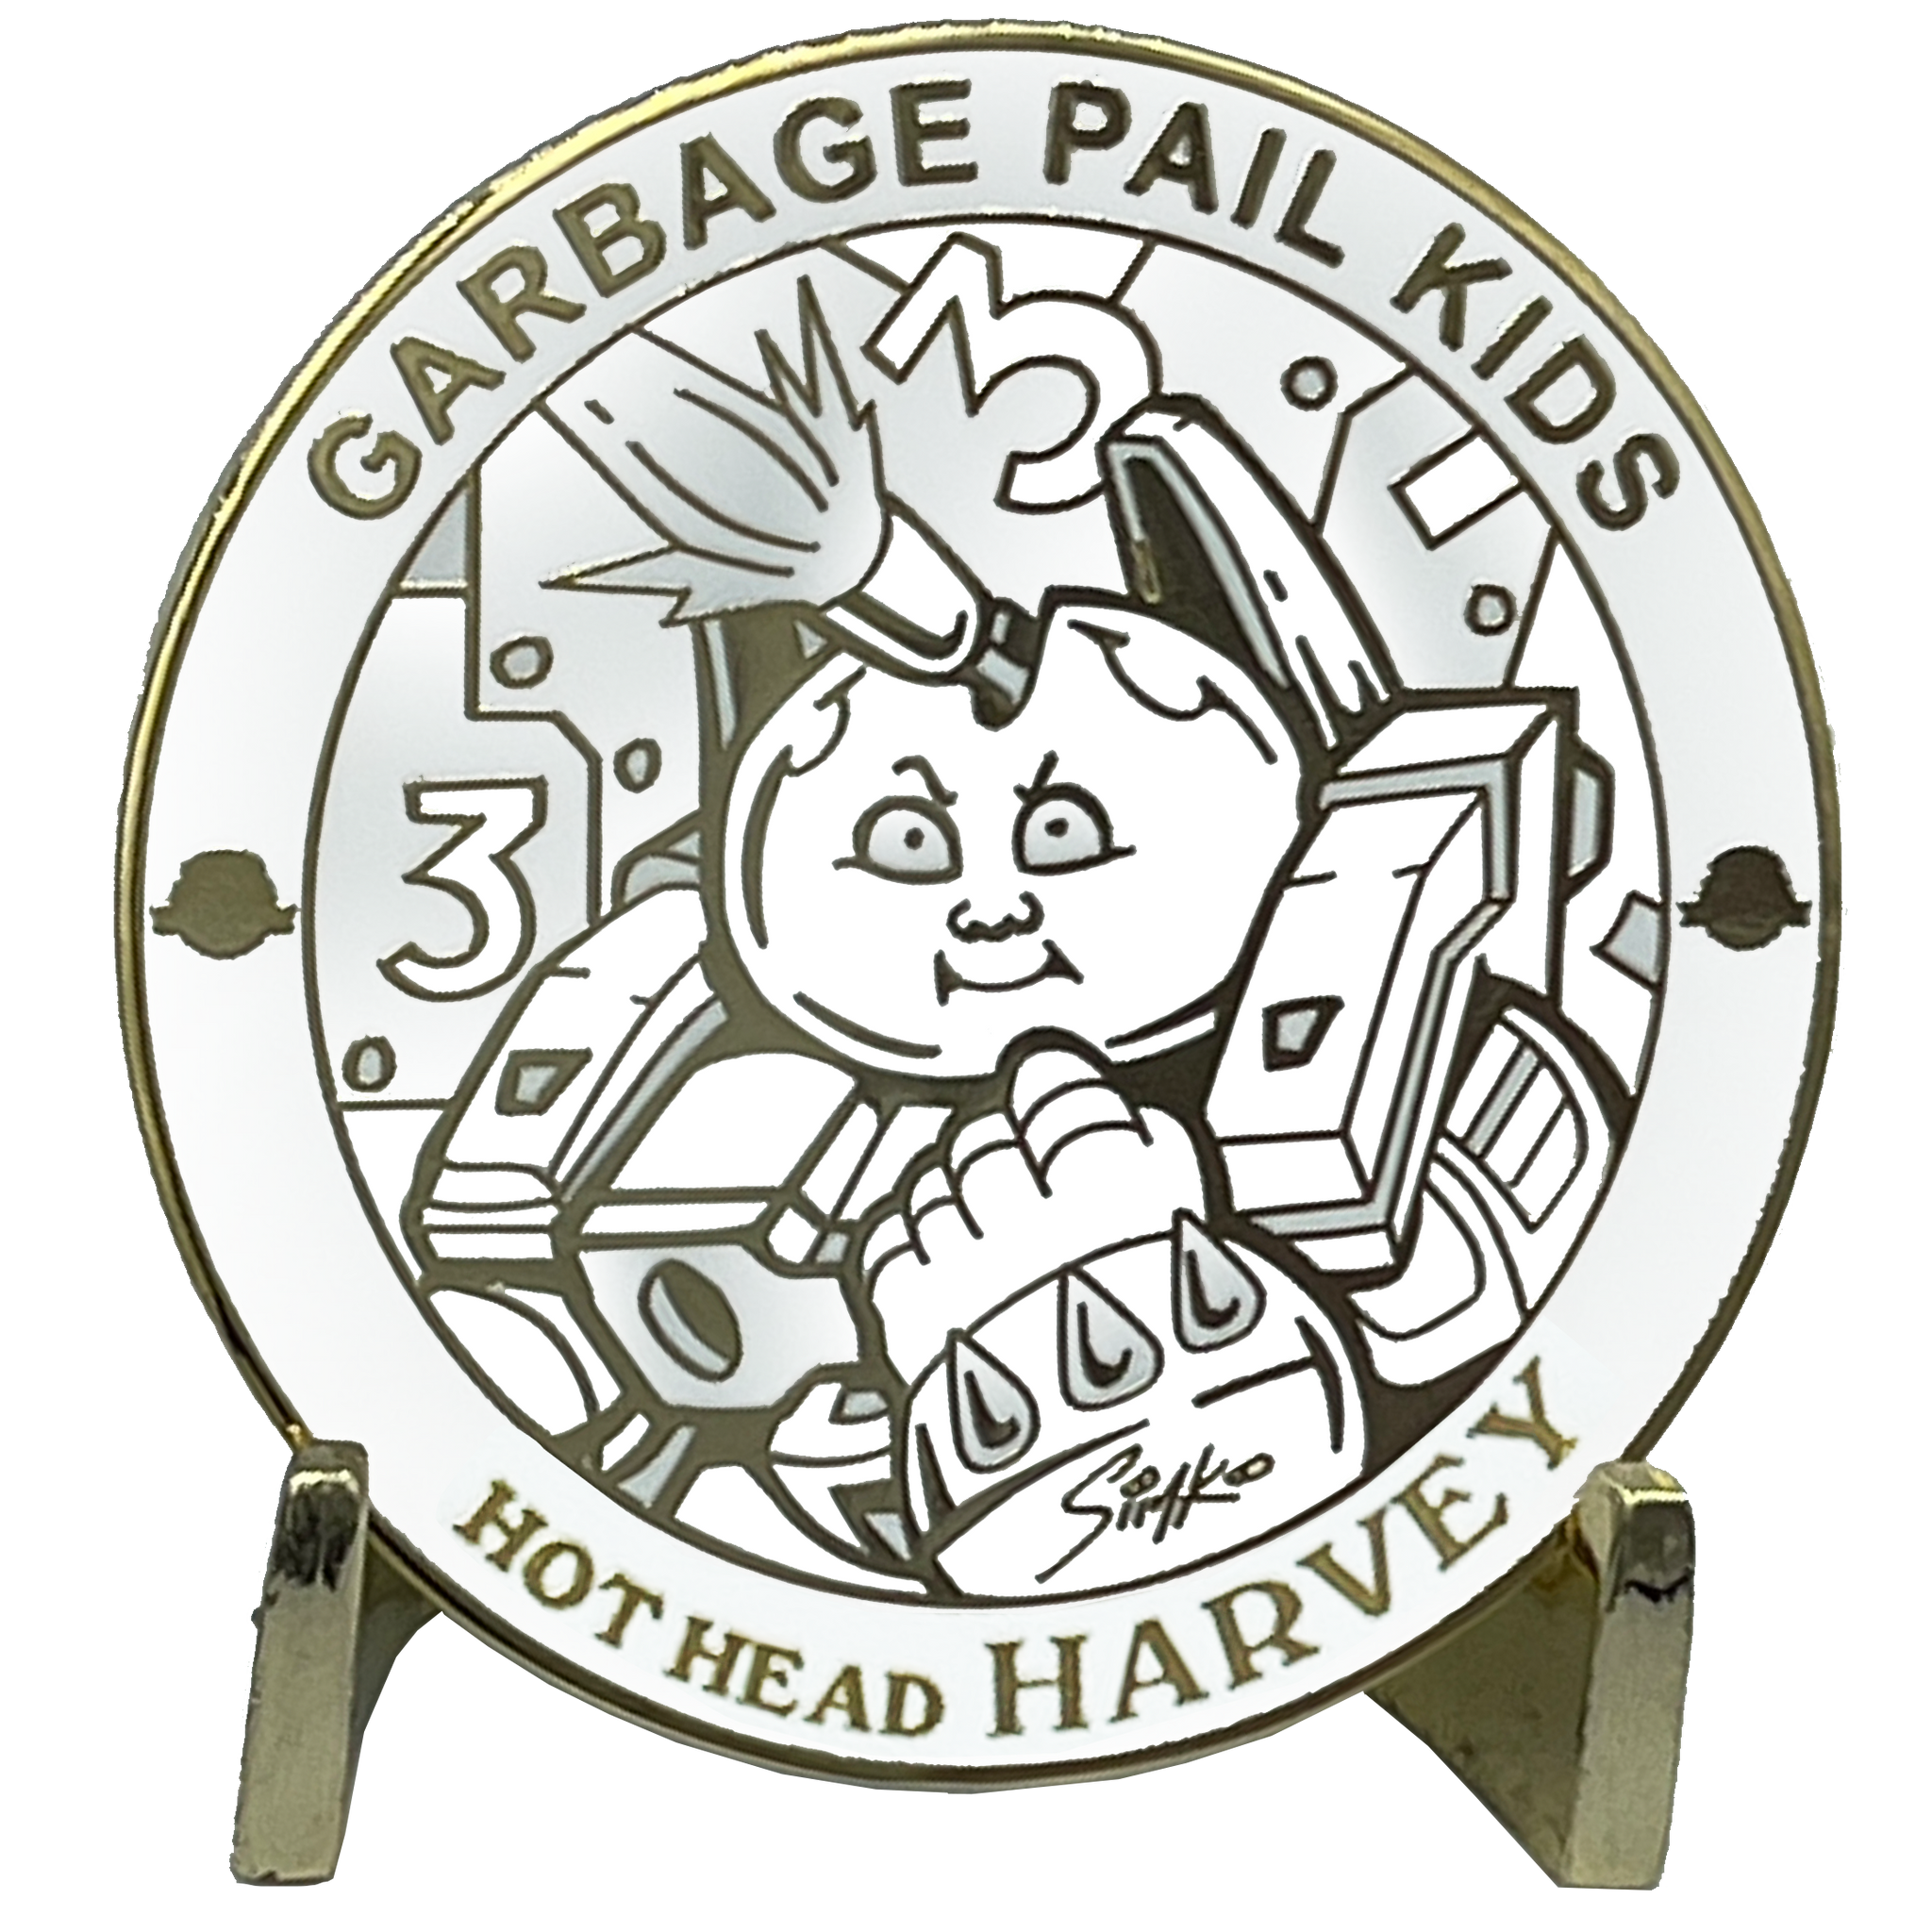 GPK-FL-01-D Hot Head Harvey Topps Officially Licensed Joe SIMKO Artist Collaboration GPK Challenge Coin Garbage Pail Kids